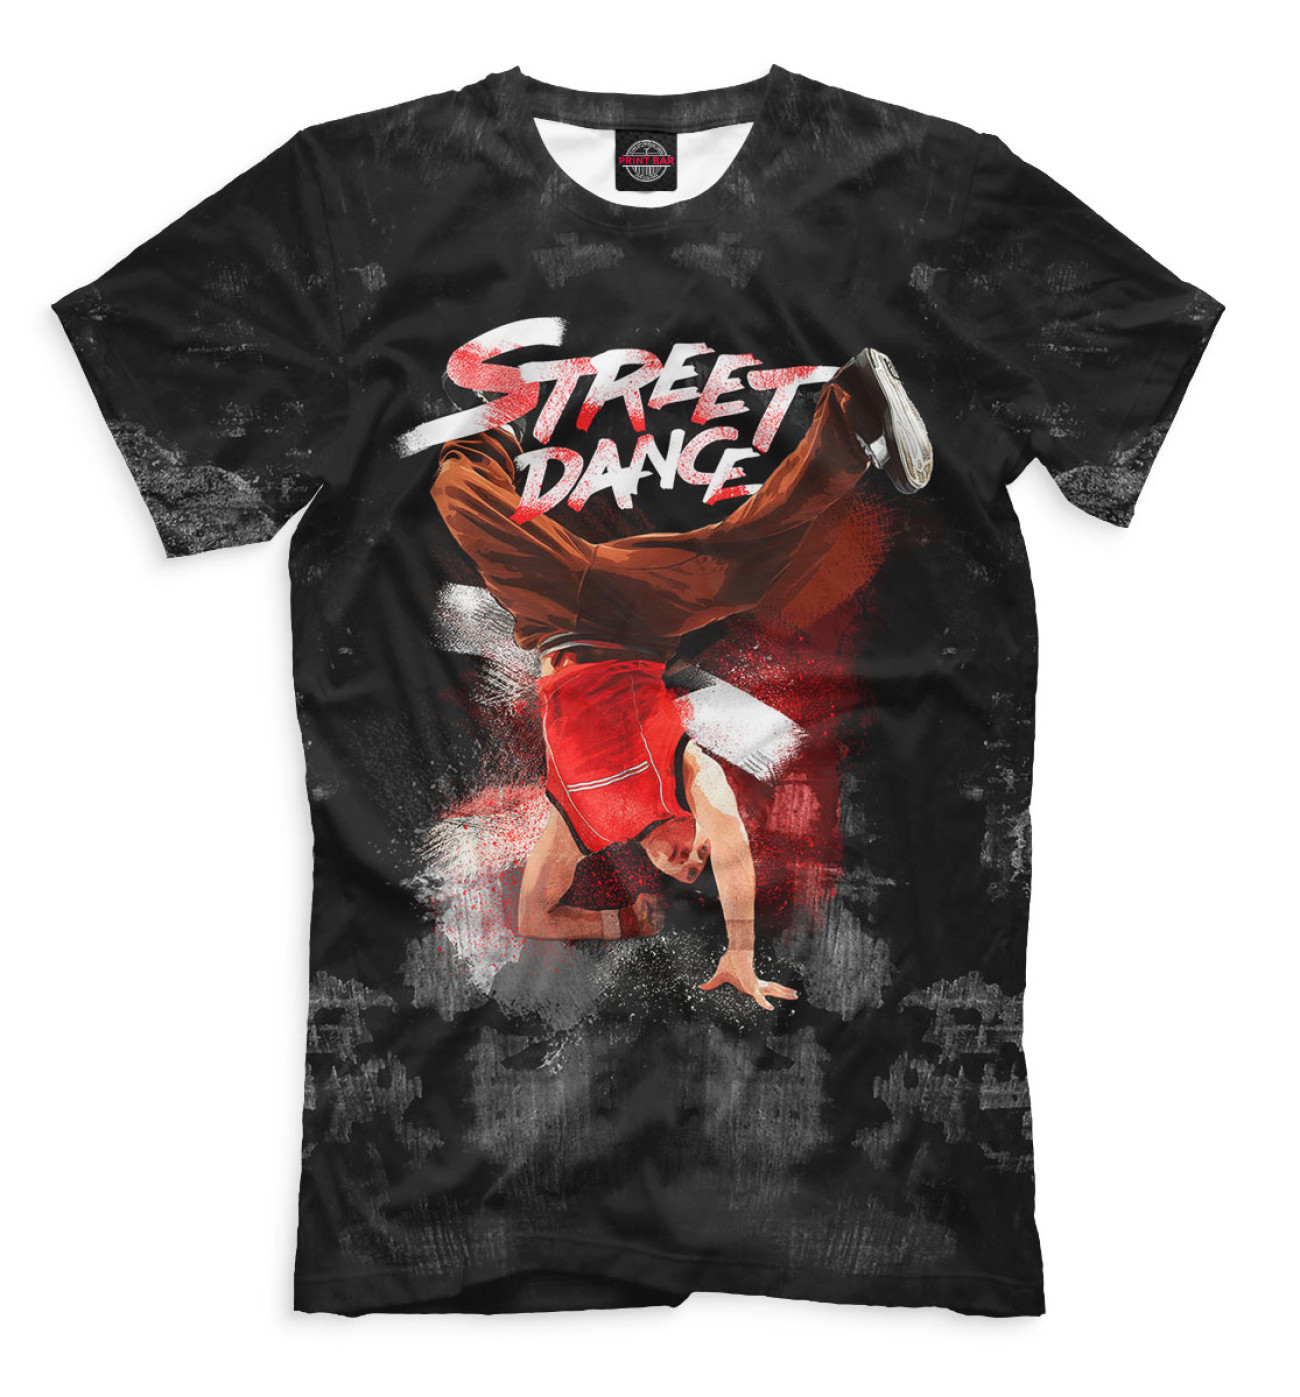 Мужская Футболка Street Dance, артикул: DNC-715138-fut-2